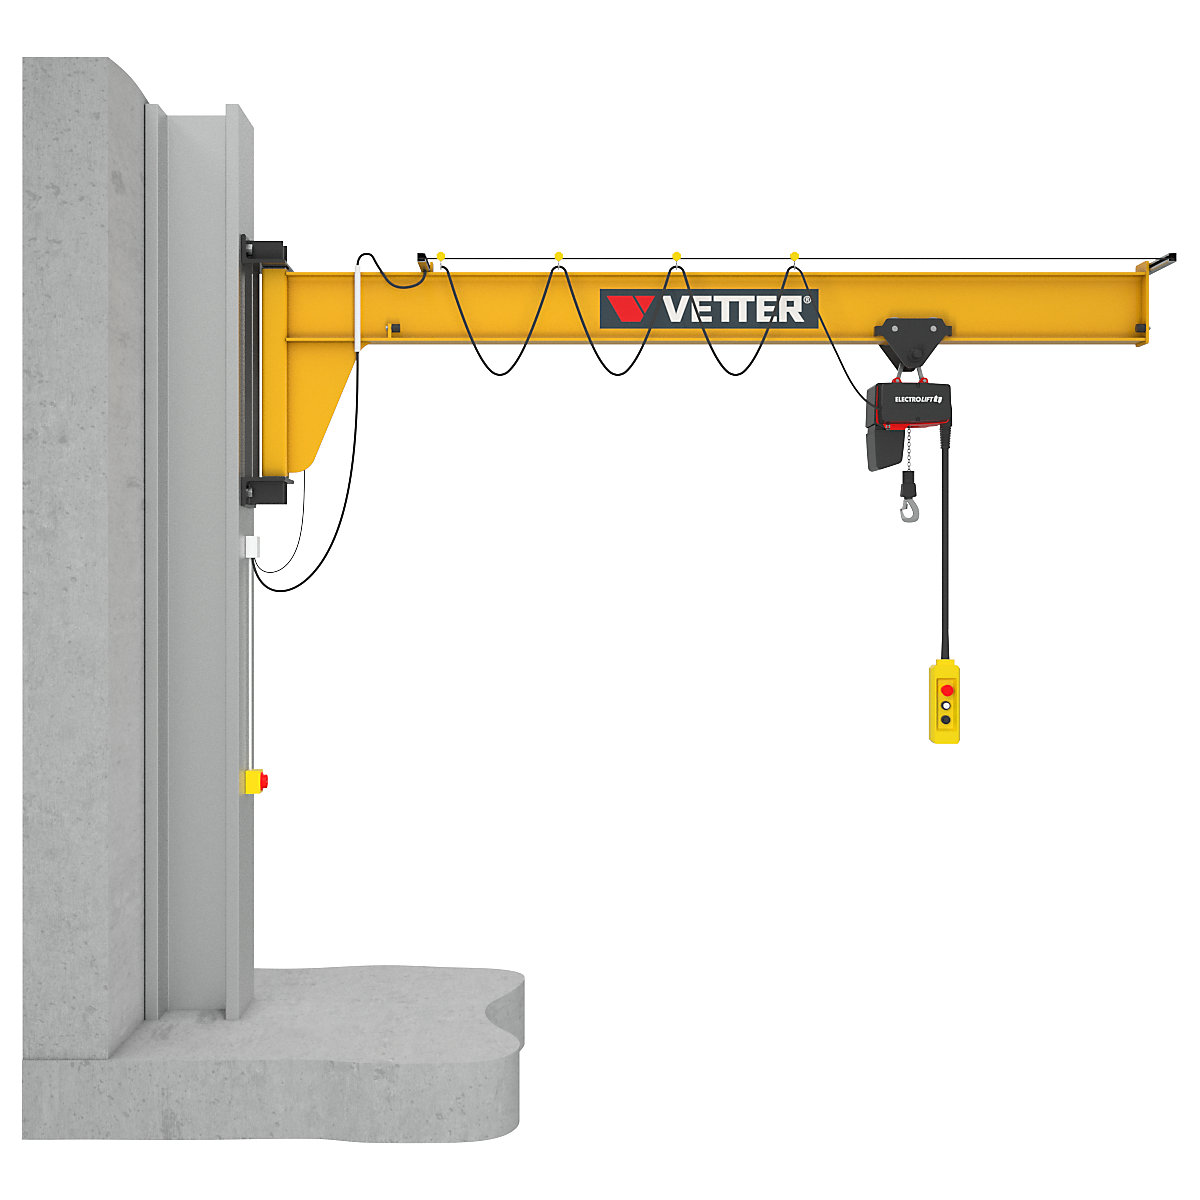 ASSISTENT AW wall mounted jib crane – Vetter